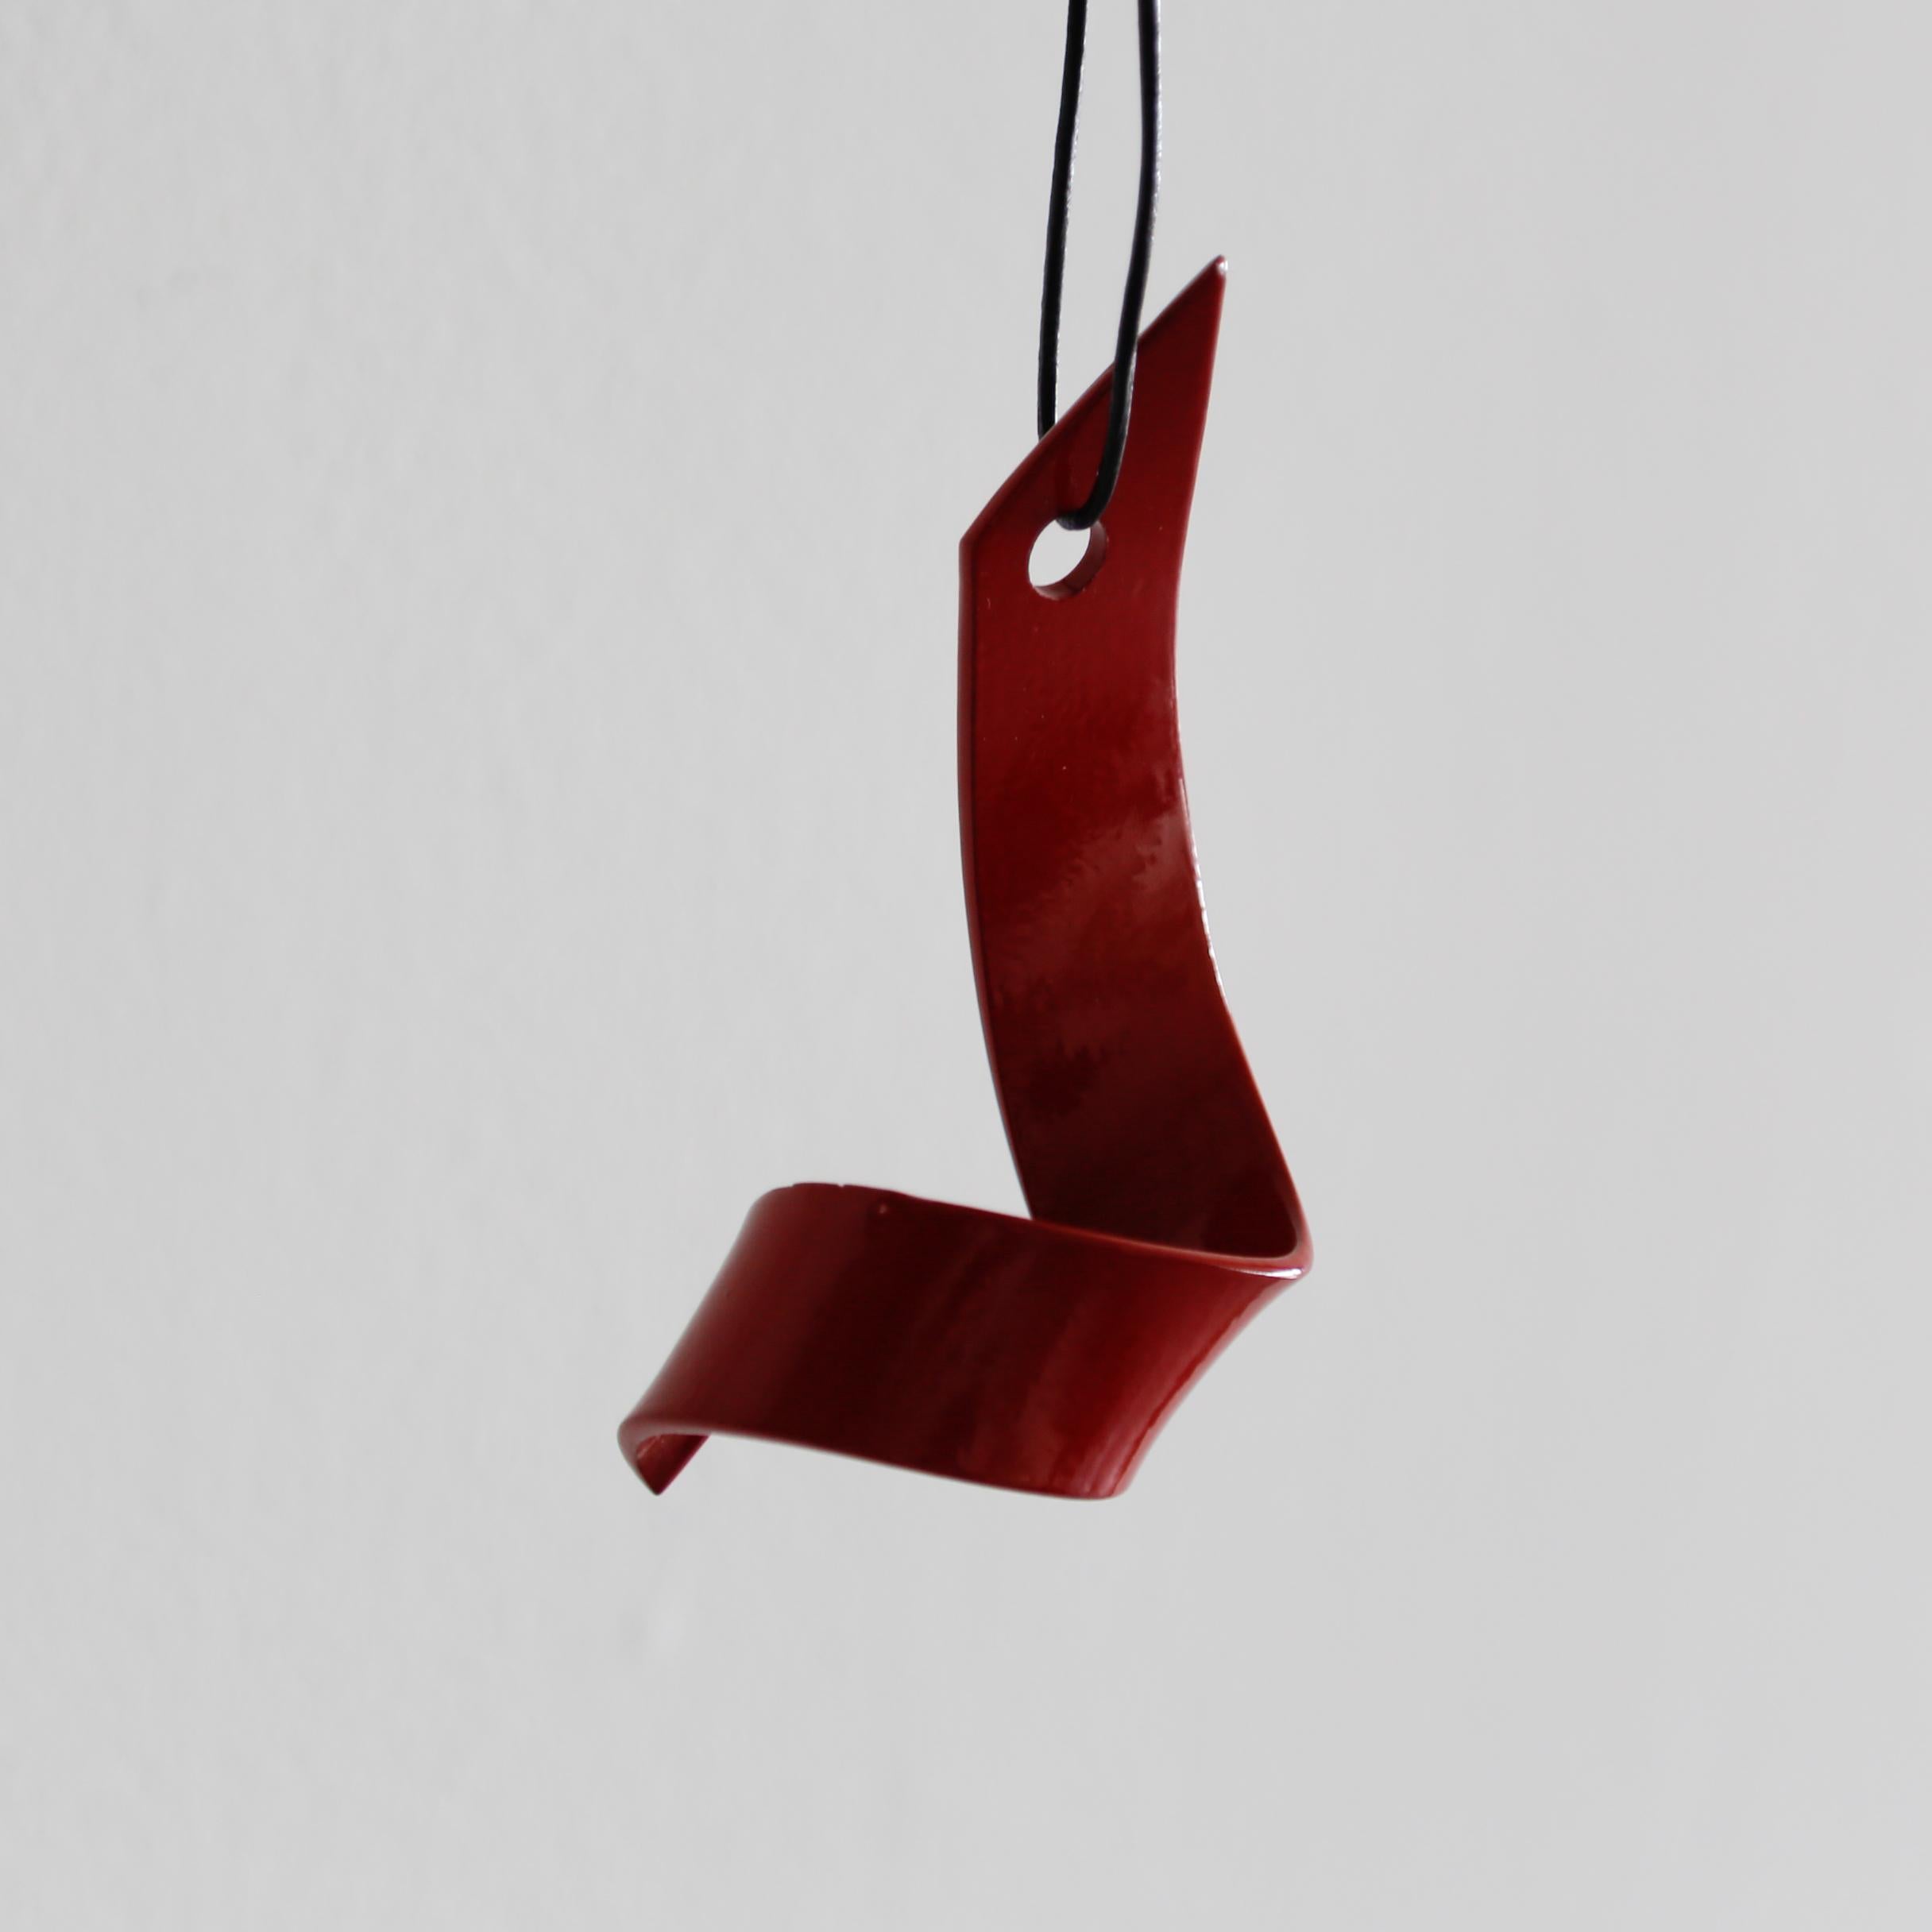 Red Ribbon 6 - Sculpture by Morgan Robinson